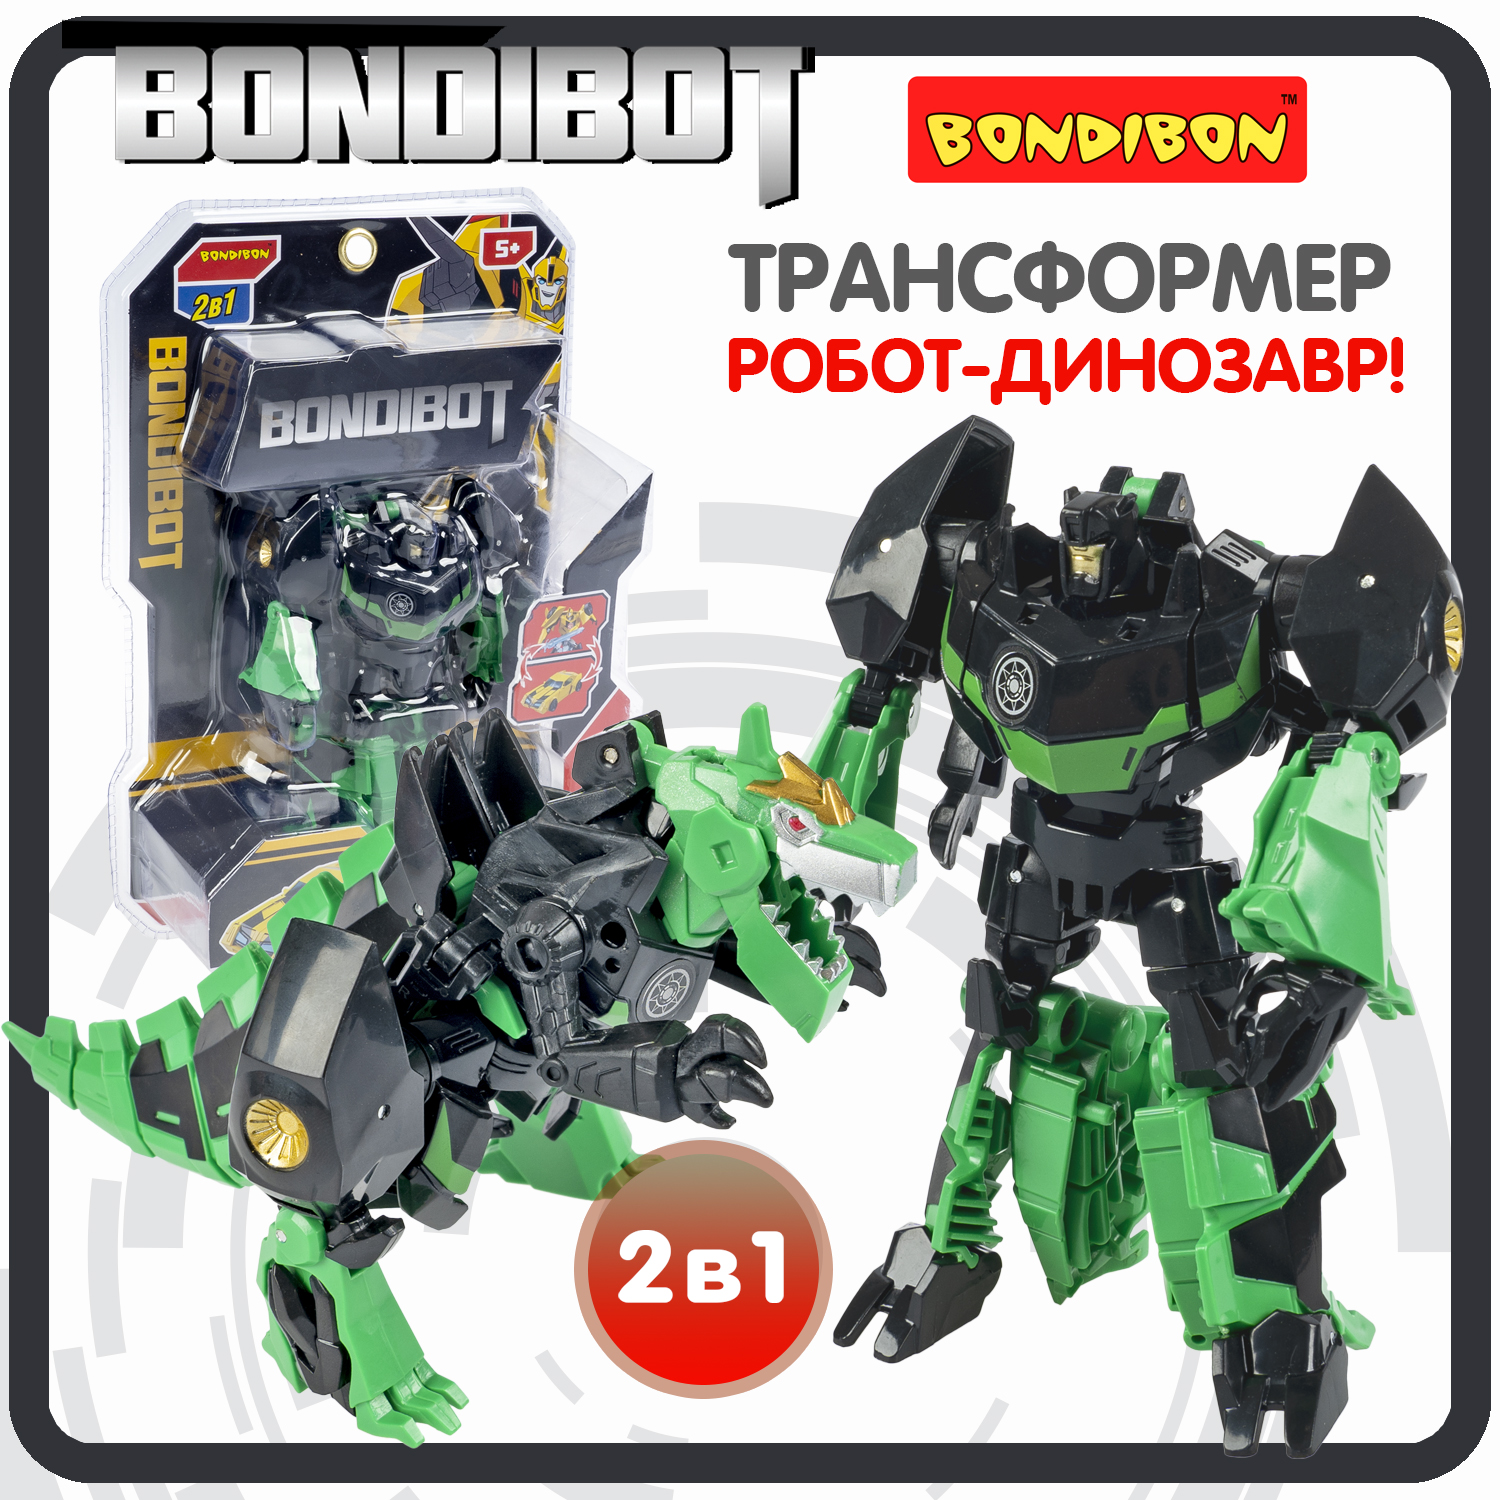 Трансформер 2в1 Bondibon, робот-динозавр, CRD 27х18,6х6 см, цвет зелёный, арт FB clapsy одеяло трансформер footer дино